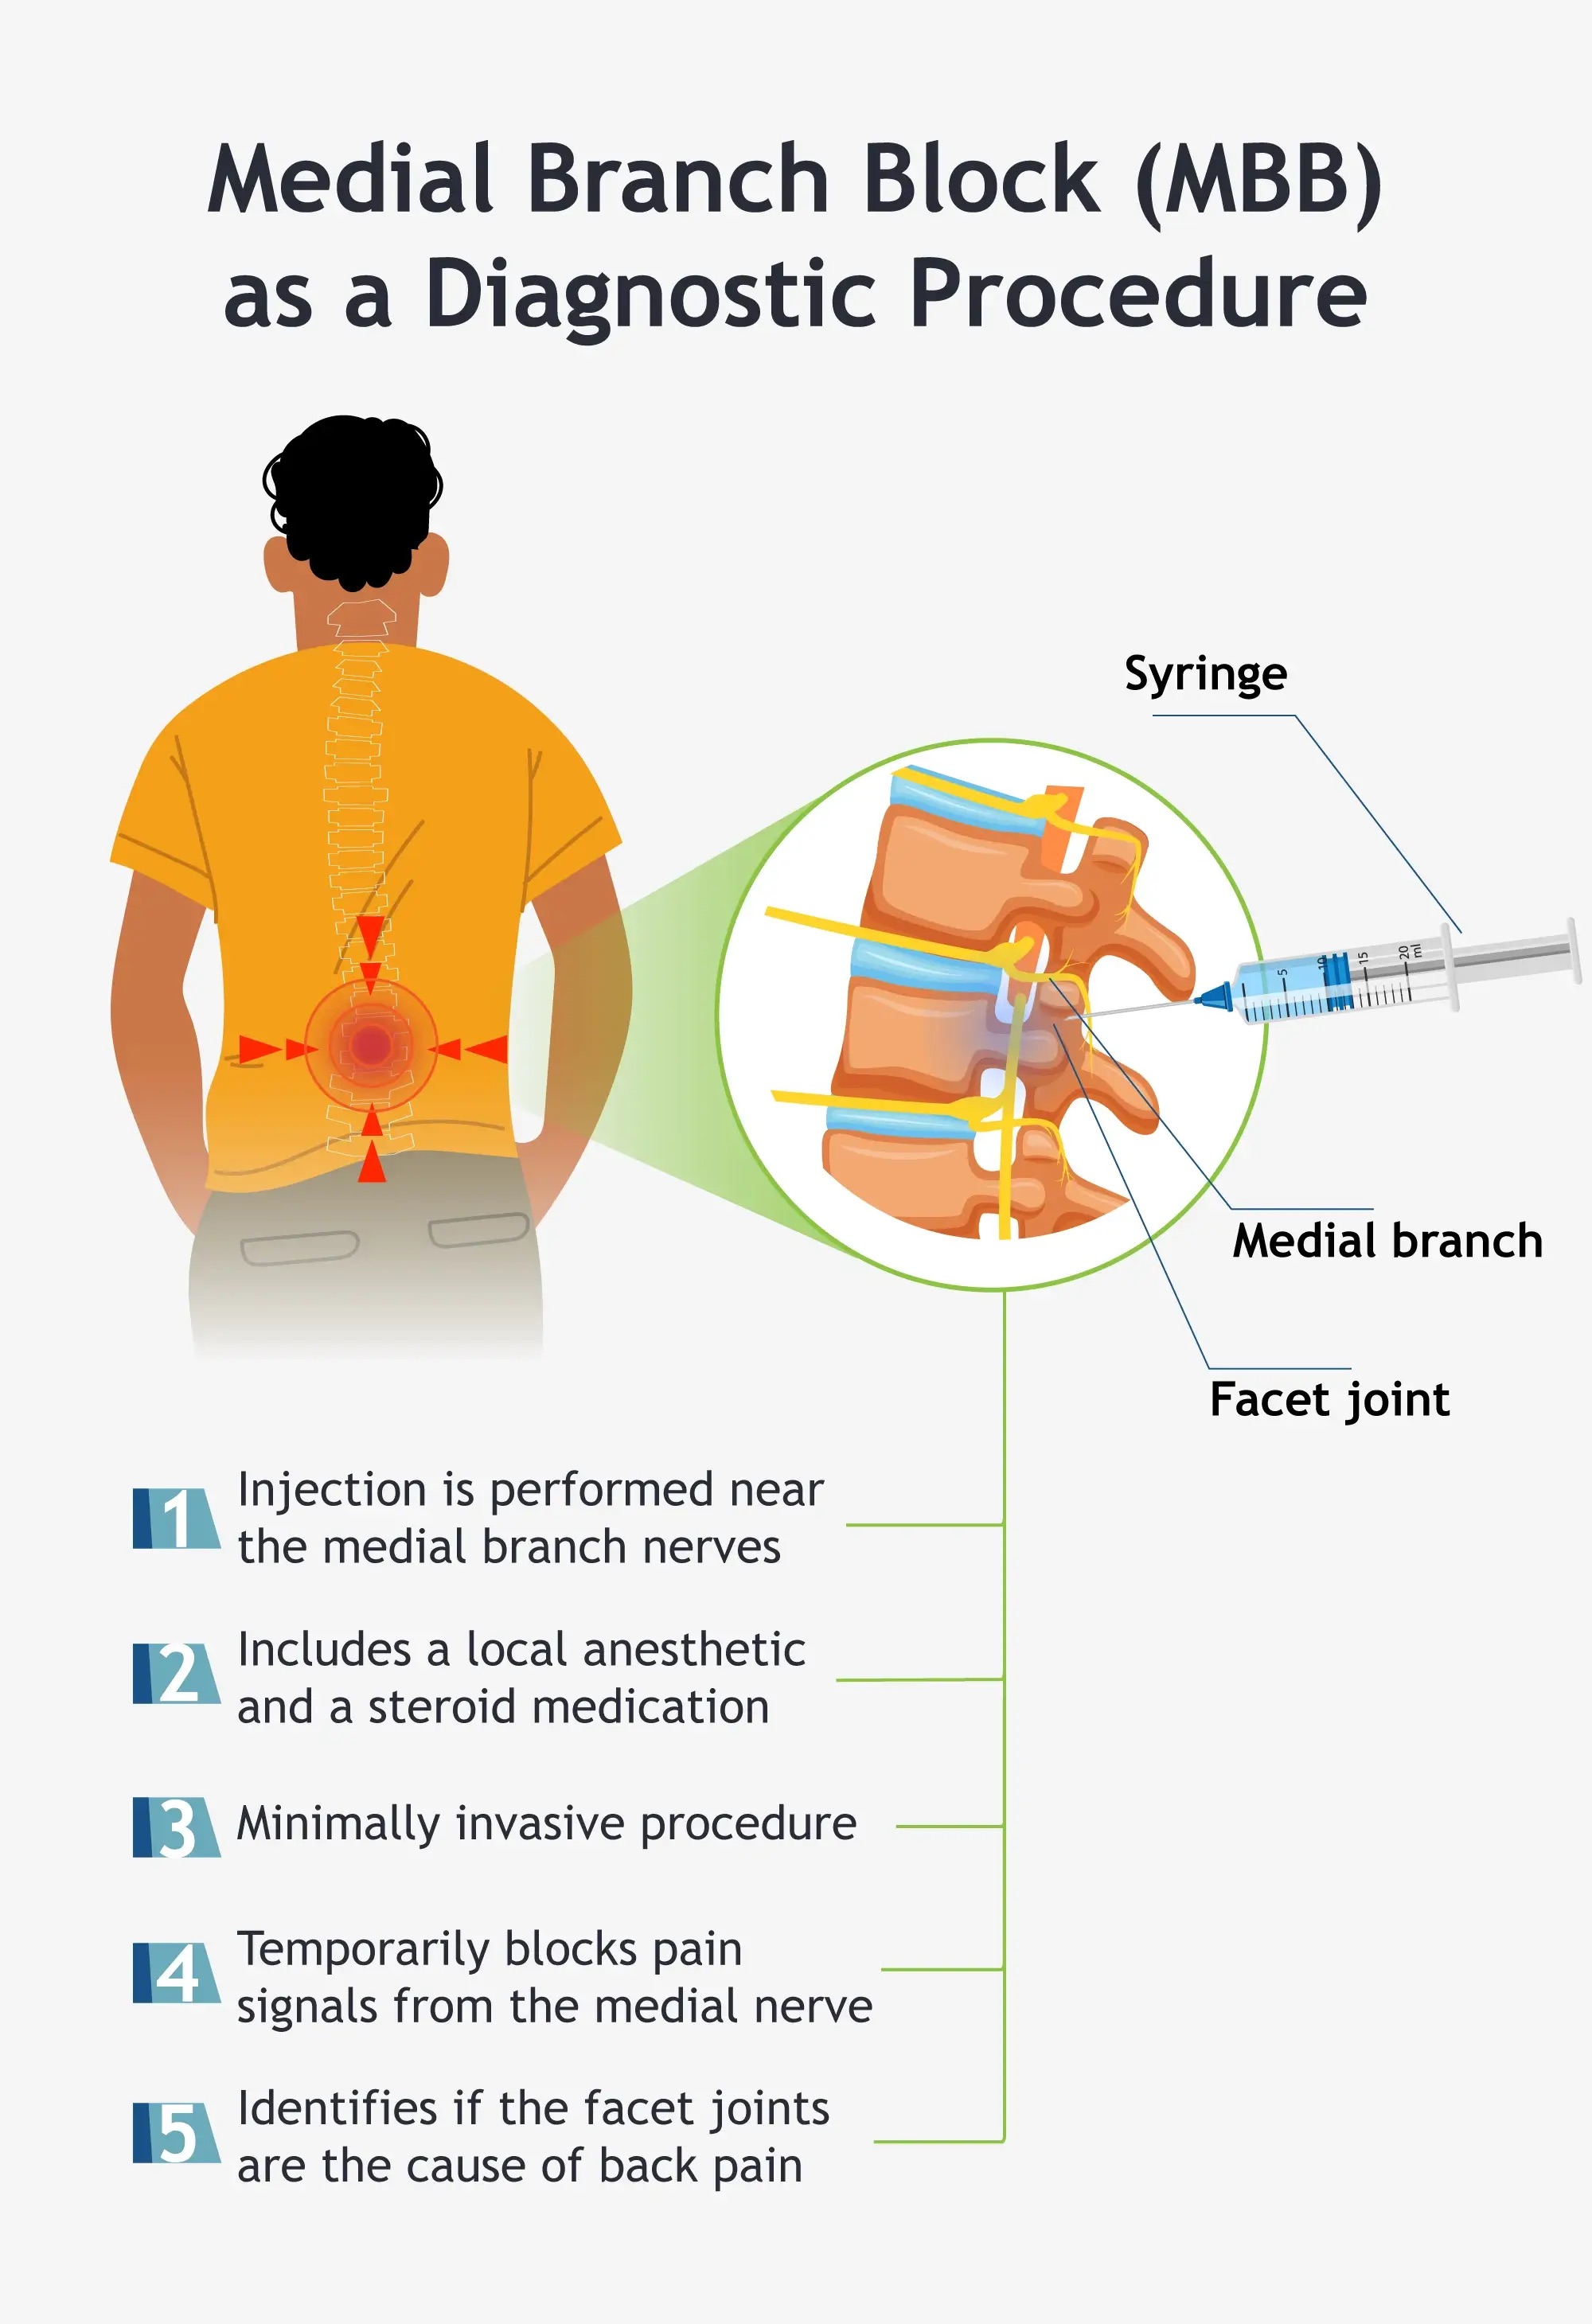 An infographic describing the medial branch block procedure.